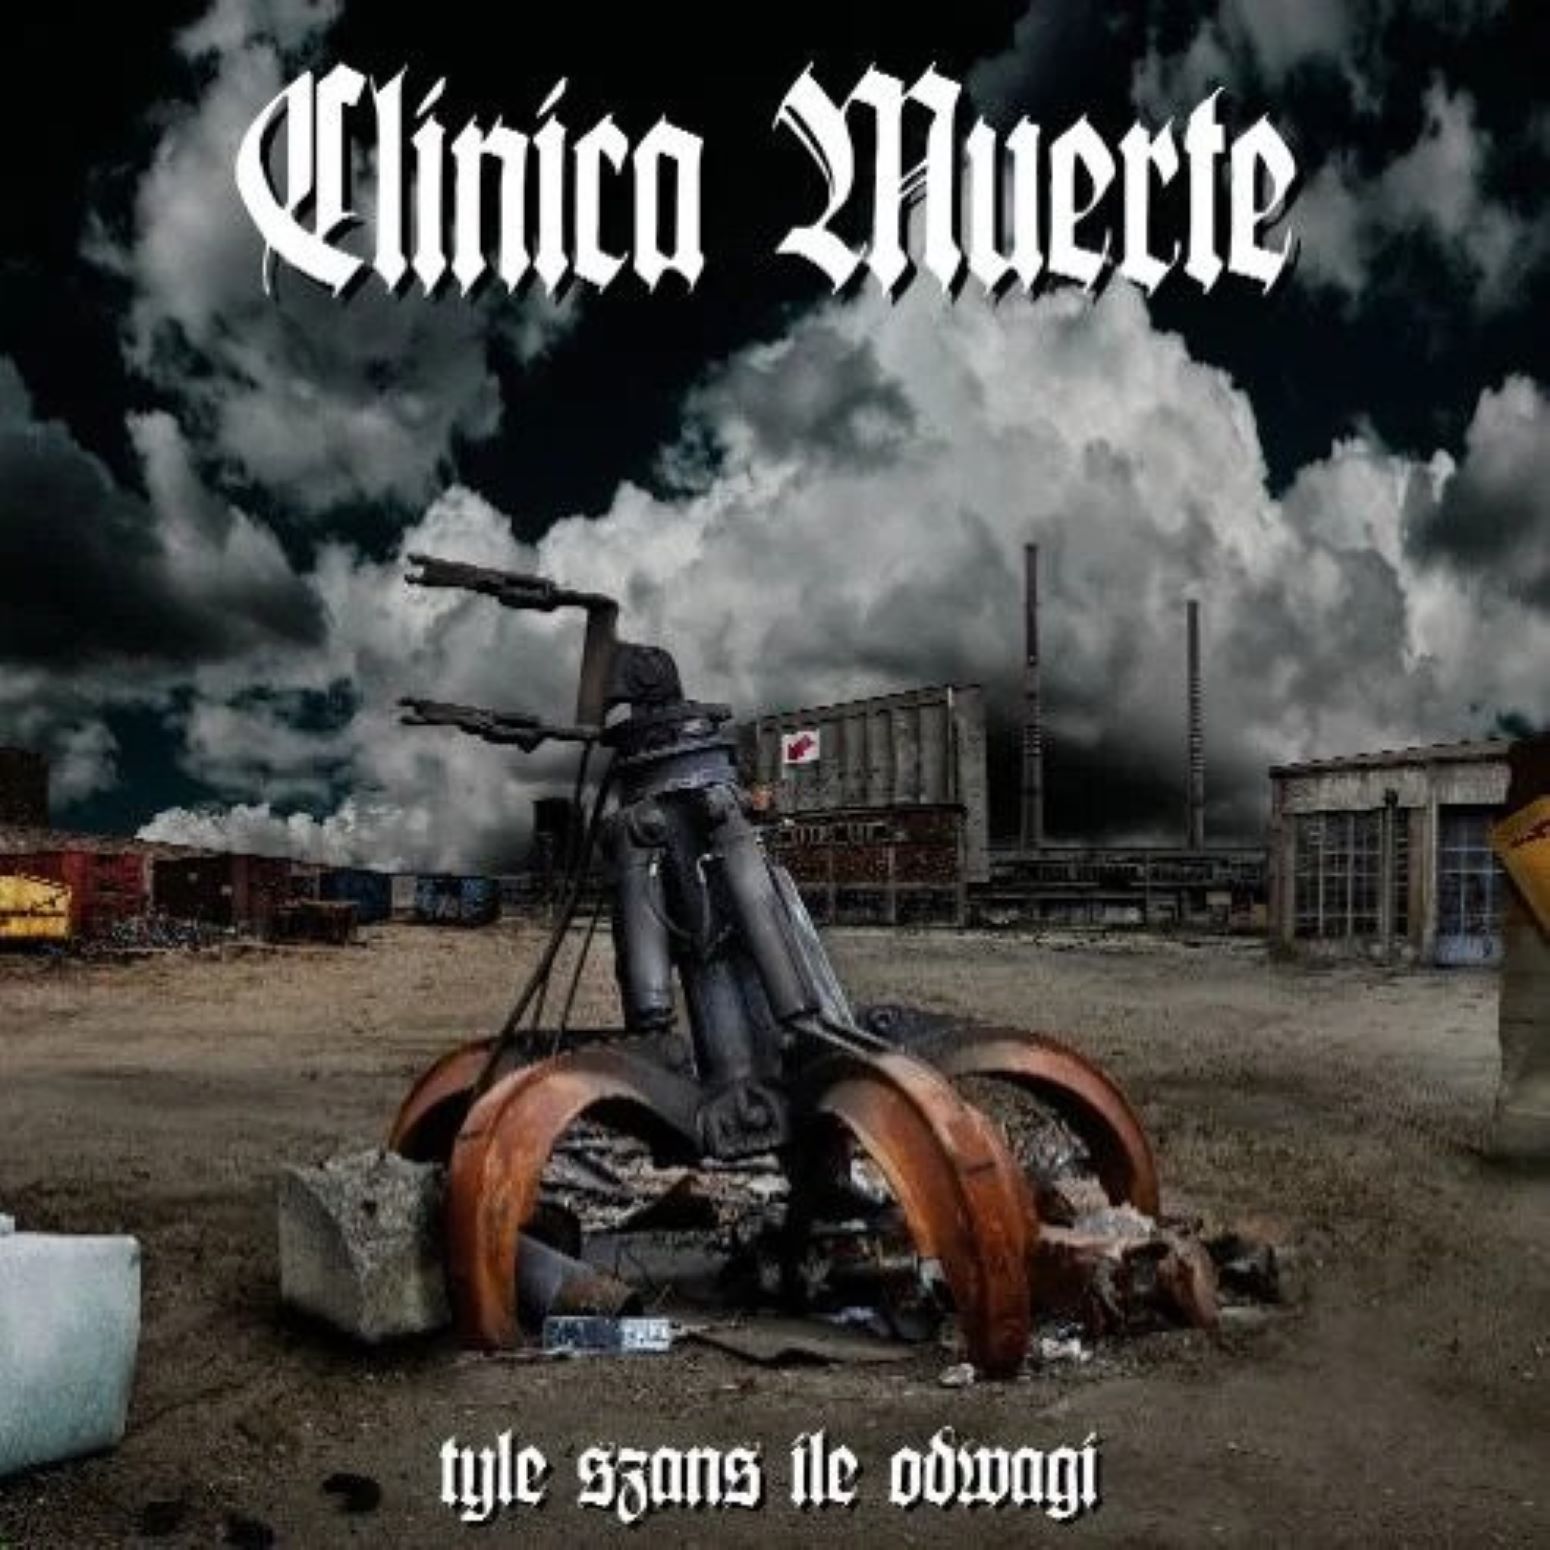 Clinica Muerte - Tyle szans ile odwagi - Encyclopaedia Metallum: The ...